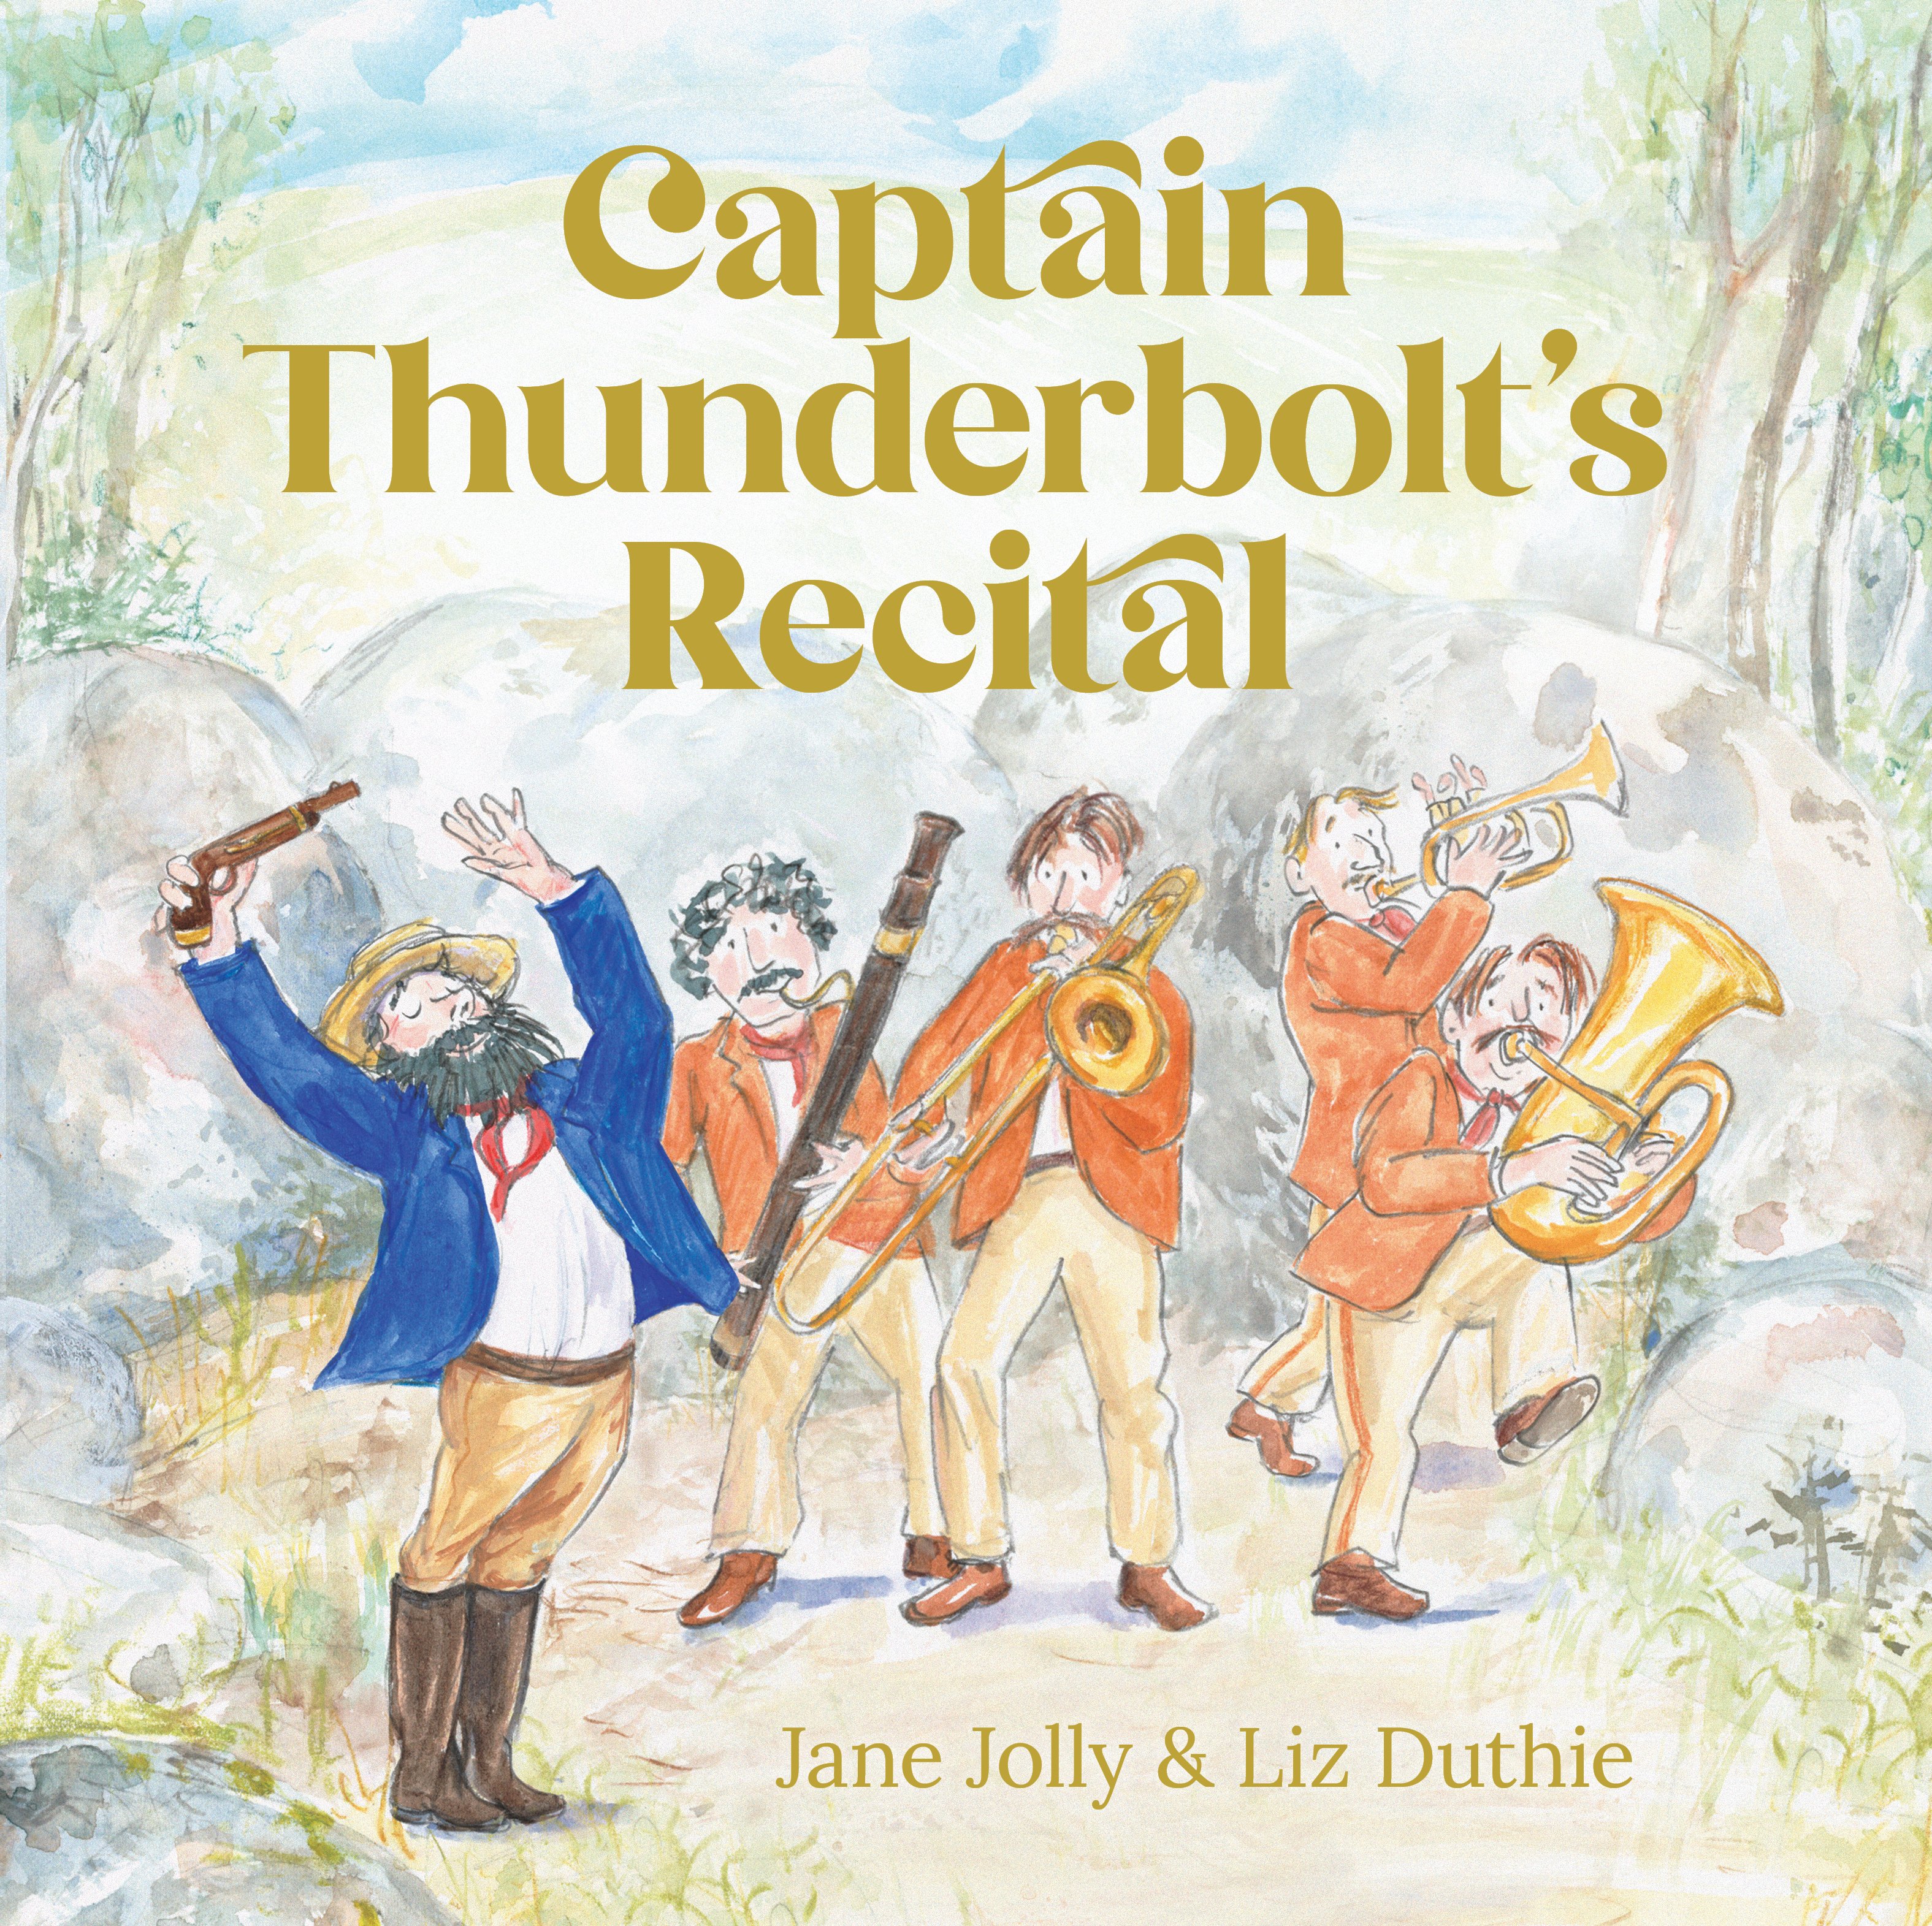 Captain Thunderbolt’s Recital by Jane Jolly